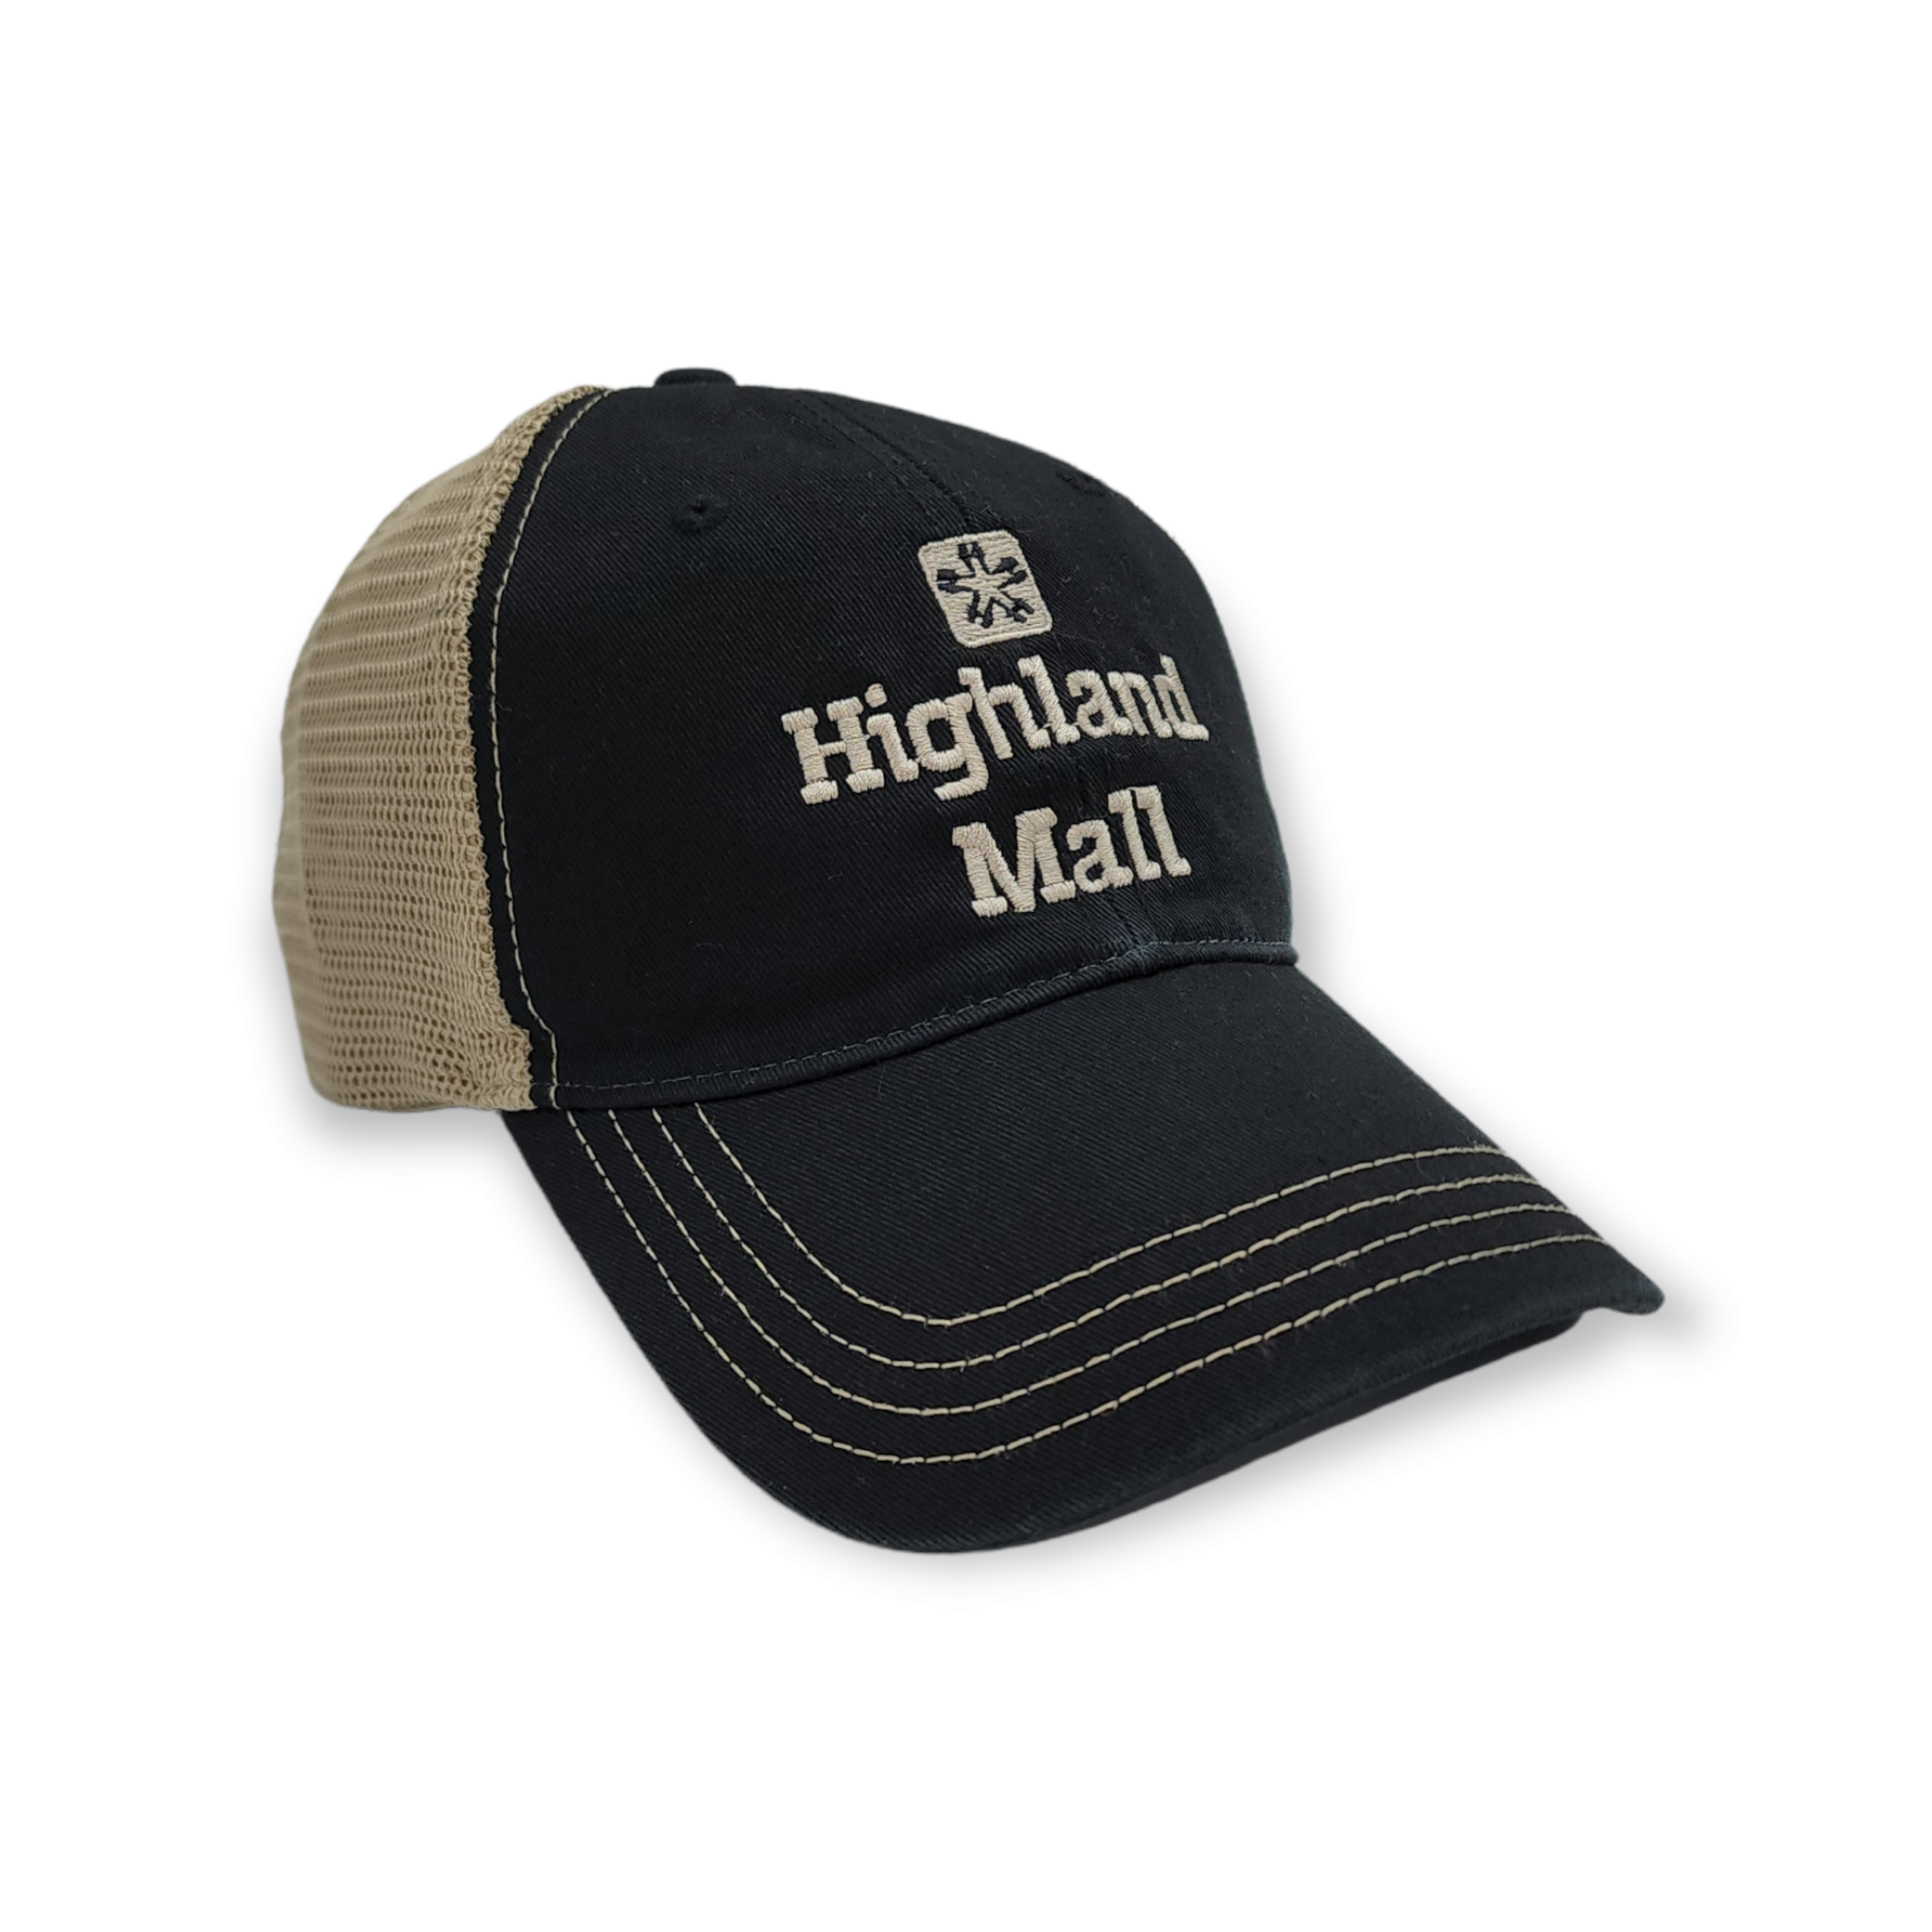 Highland Mall Trucker Hat